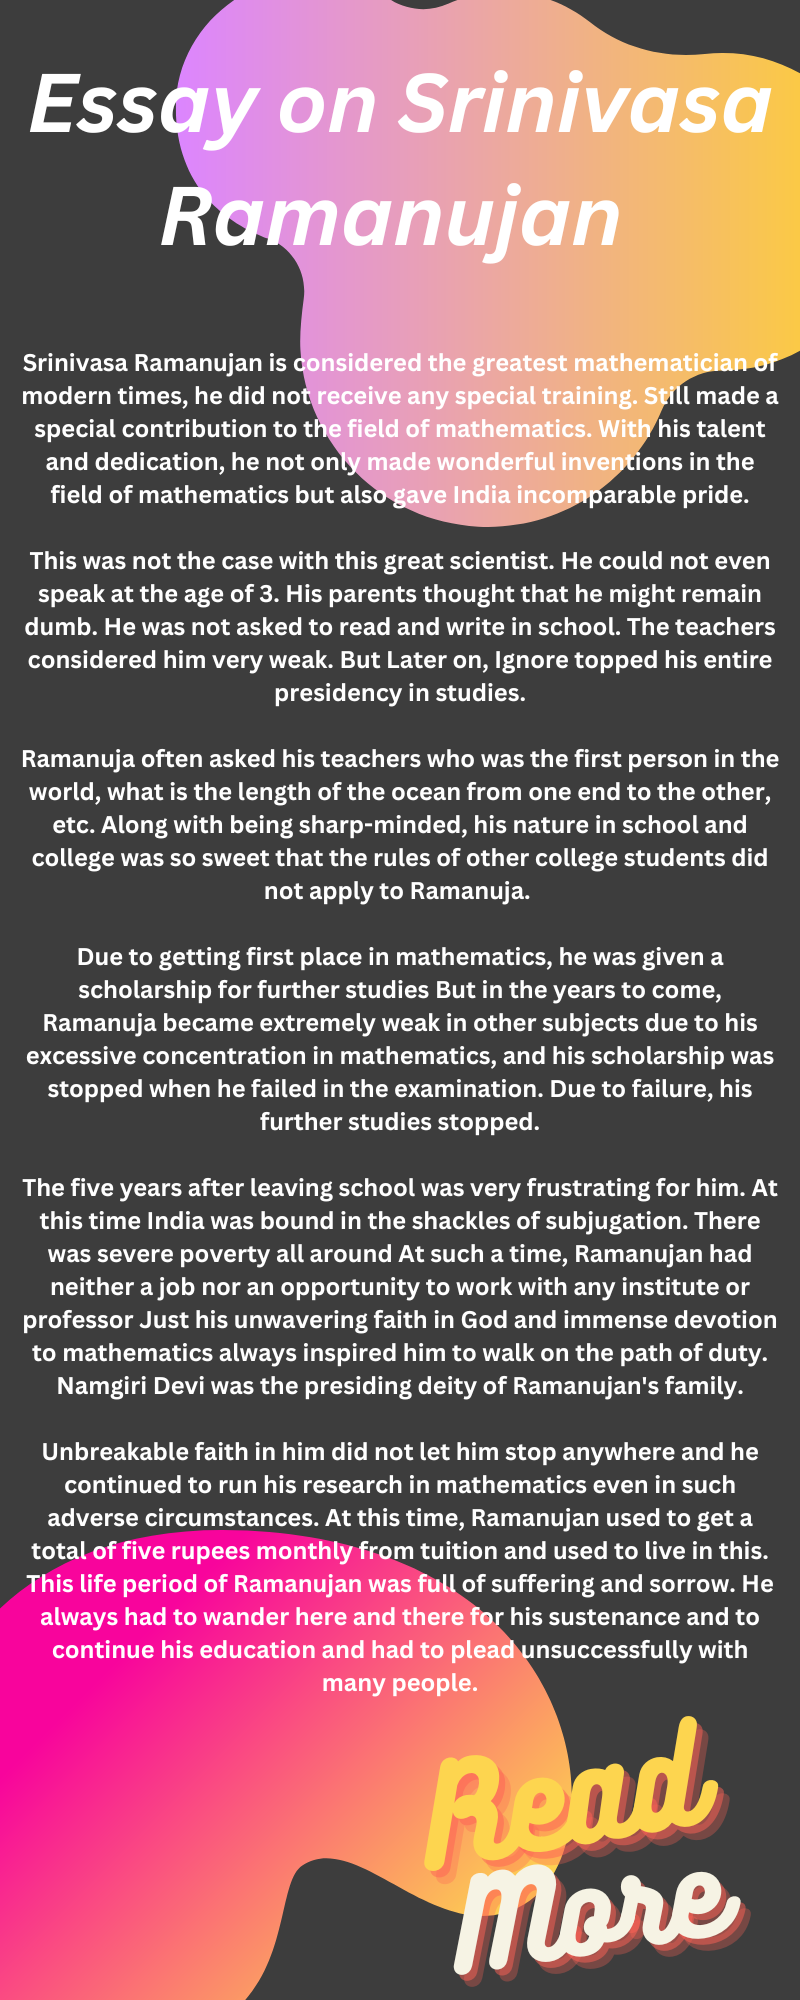 Srinivasa Ramanujan essay in 100 words